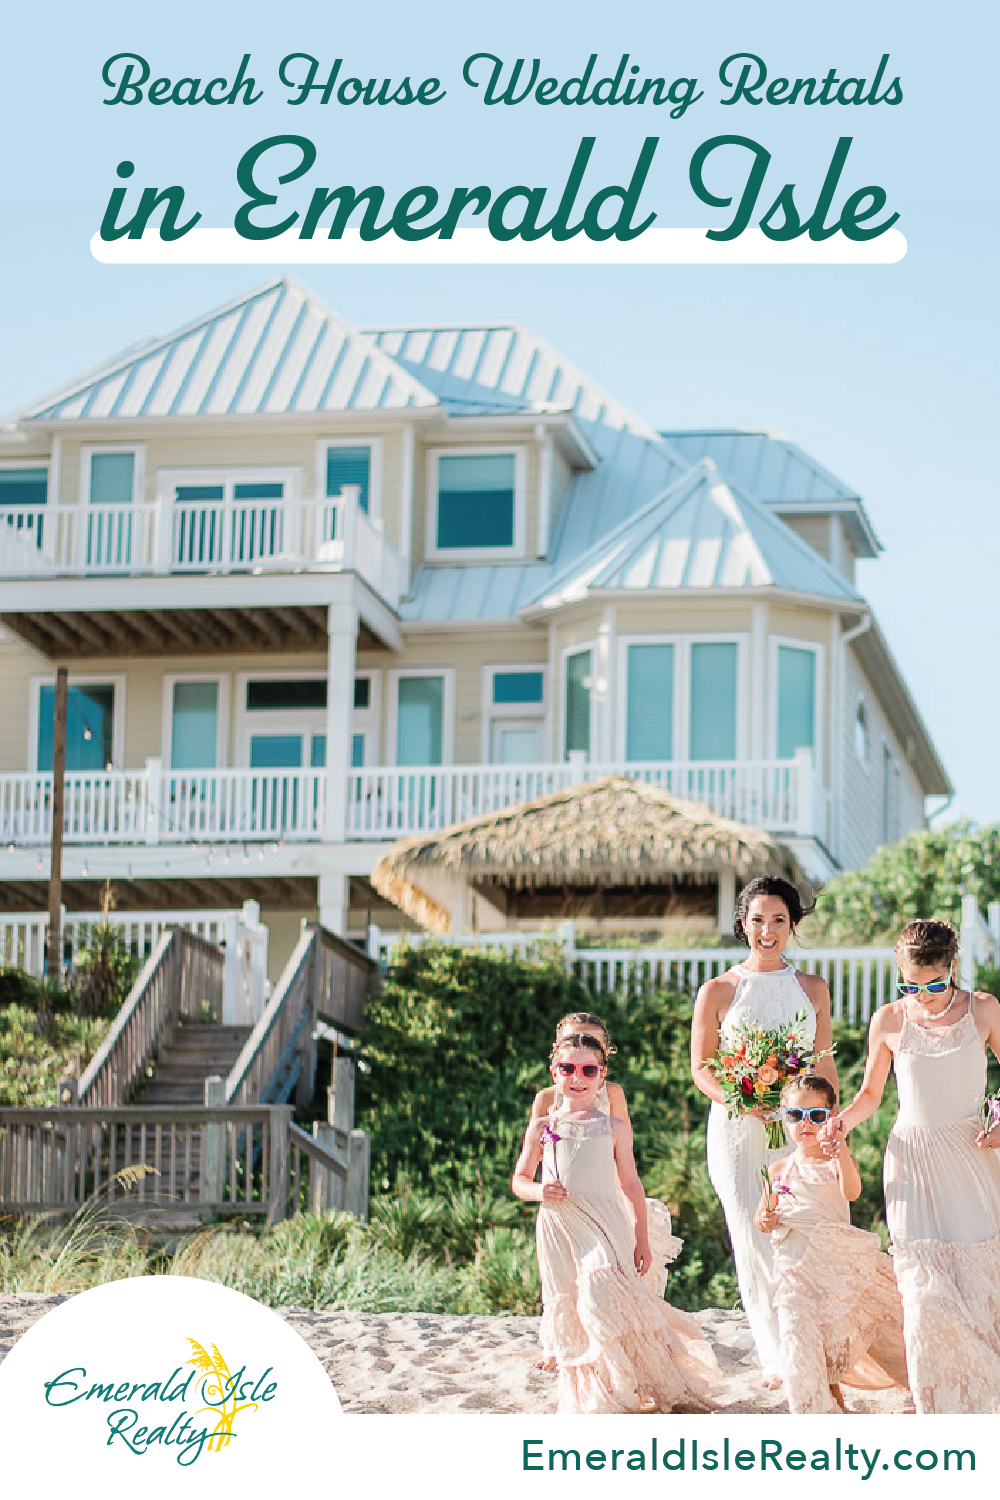 Beach House Wedding Rentals in Emerald Isle, NC